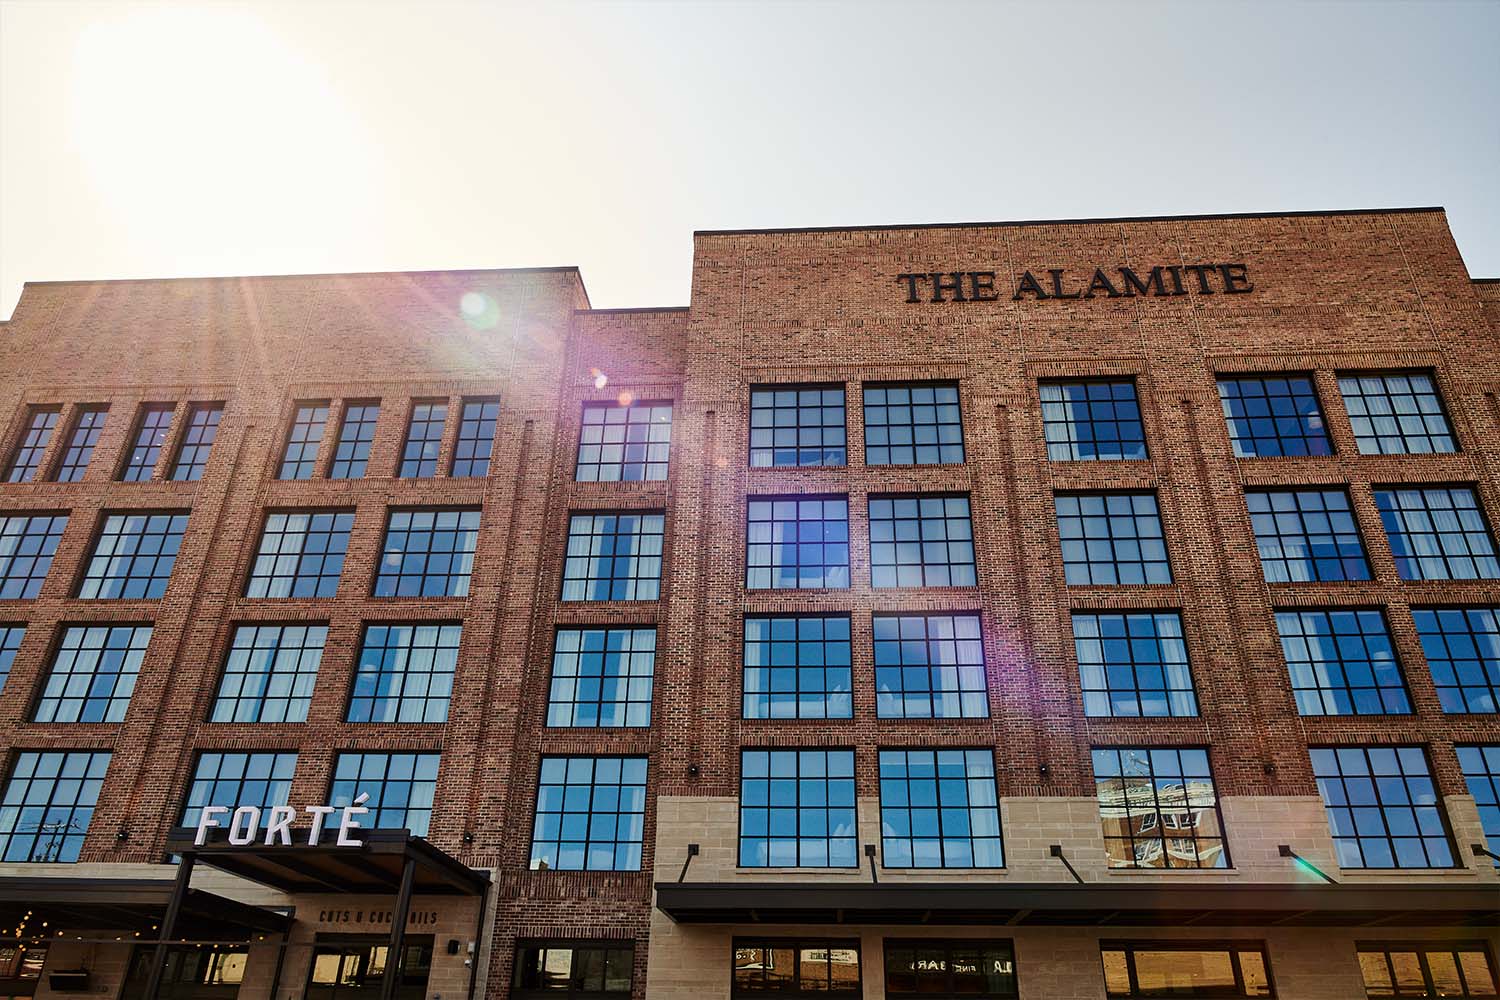 The Alamite exterior